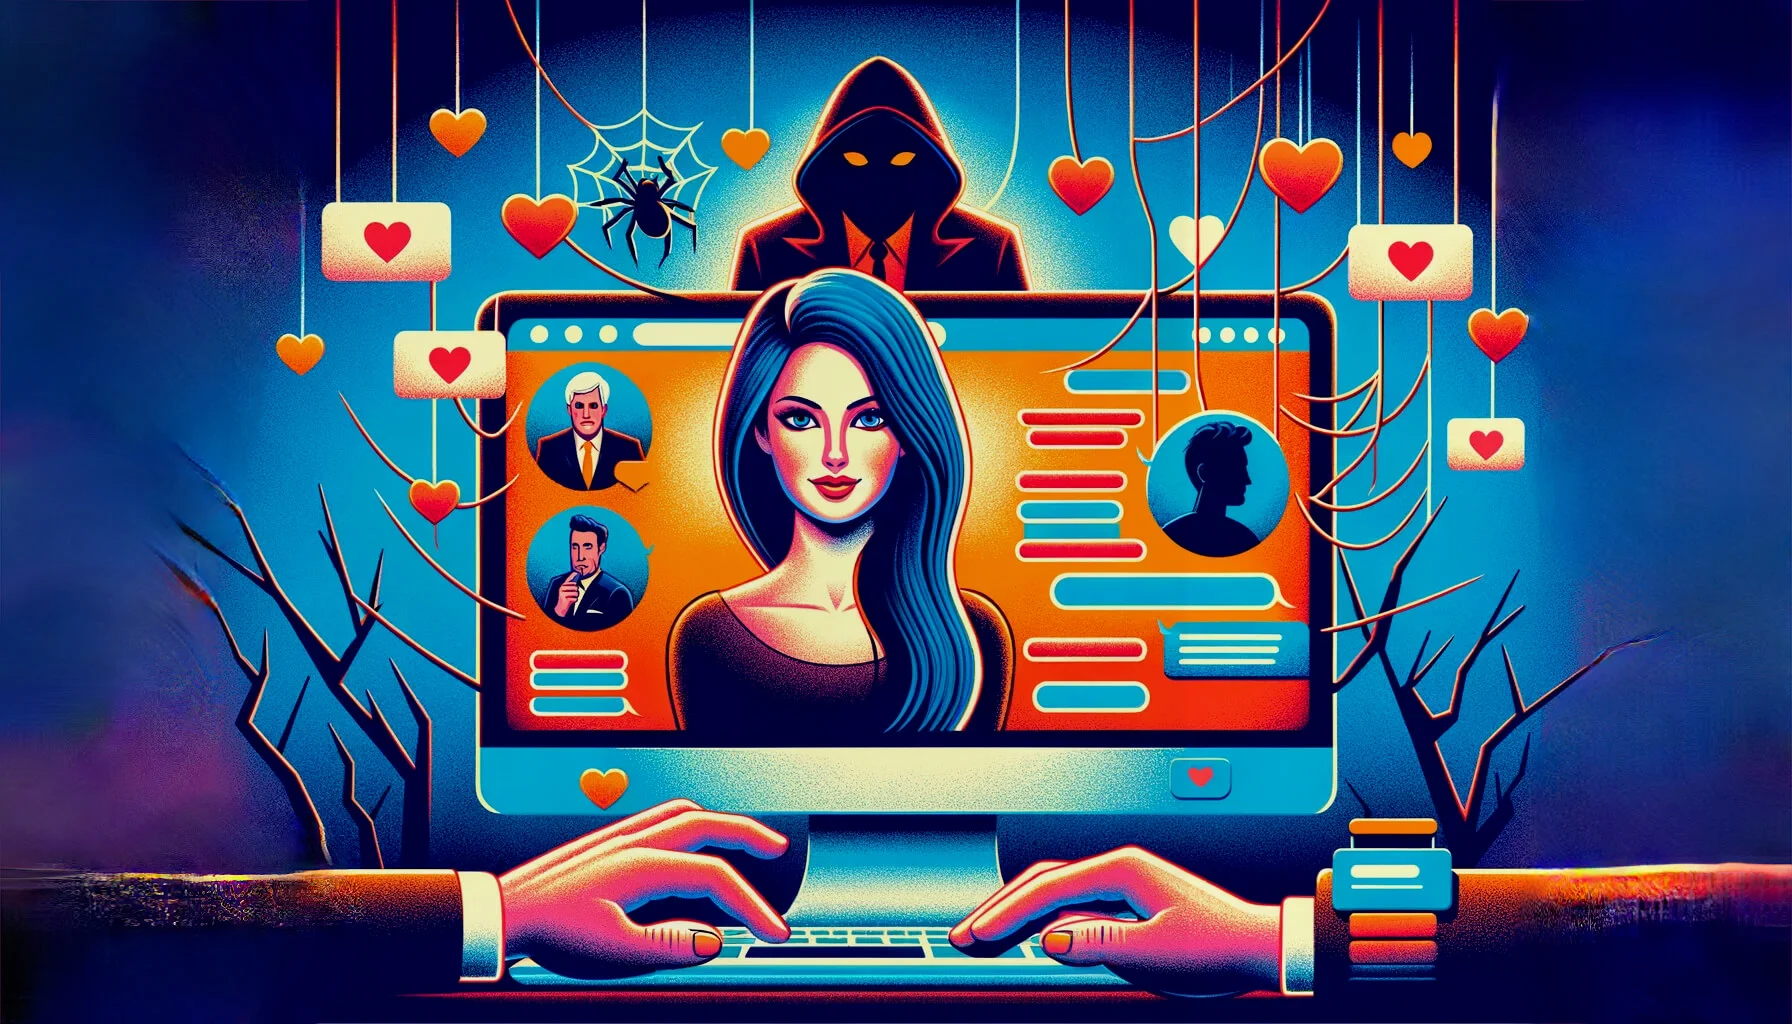 Illustration of Facebook Dating Scam by Hacker9